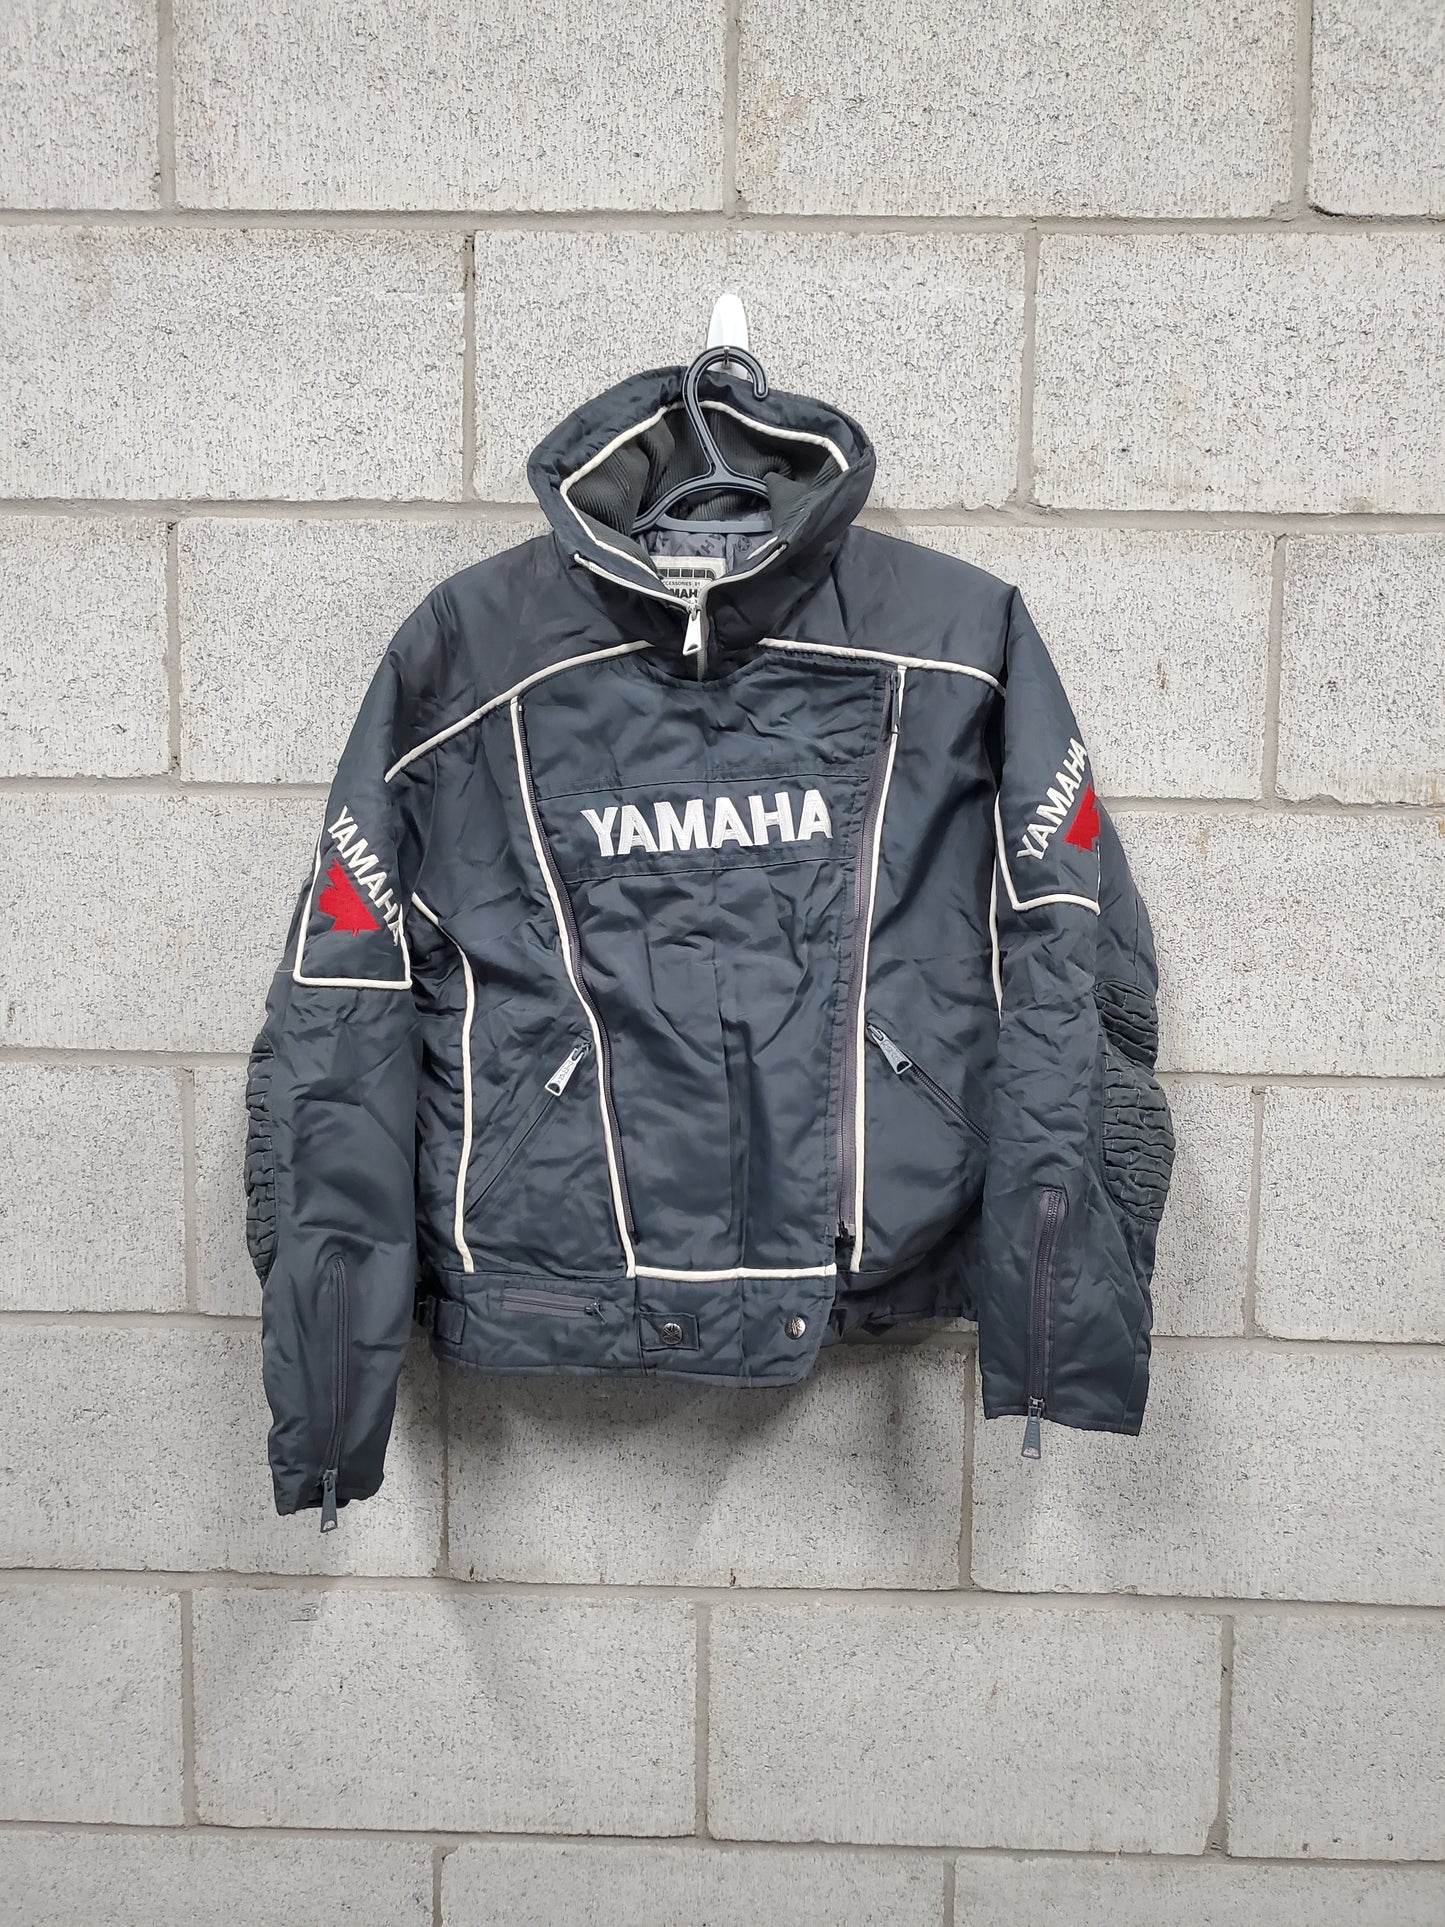 Mens Yamaha Racing Jacket Size Medium